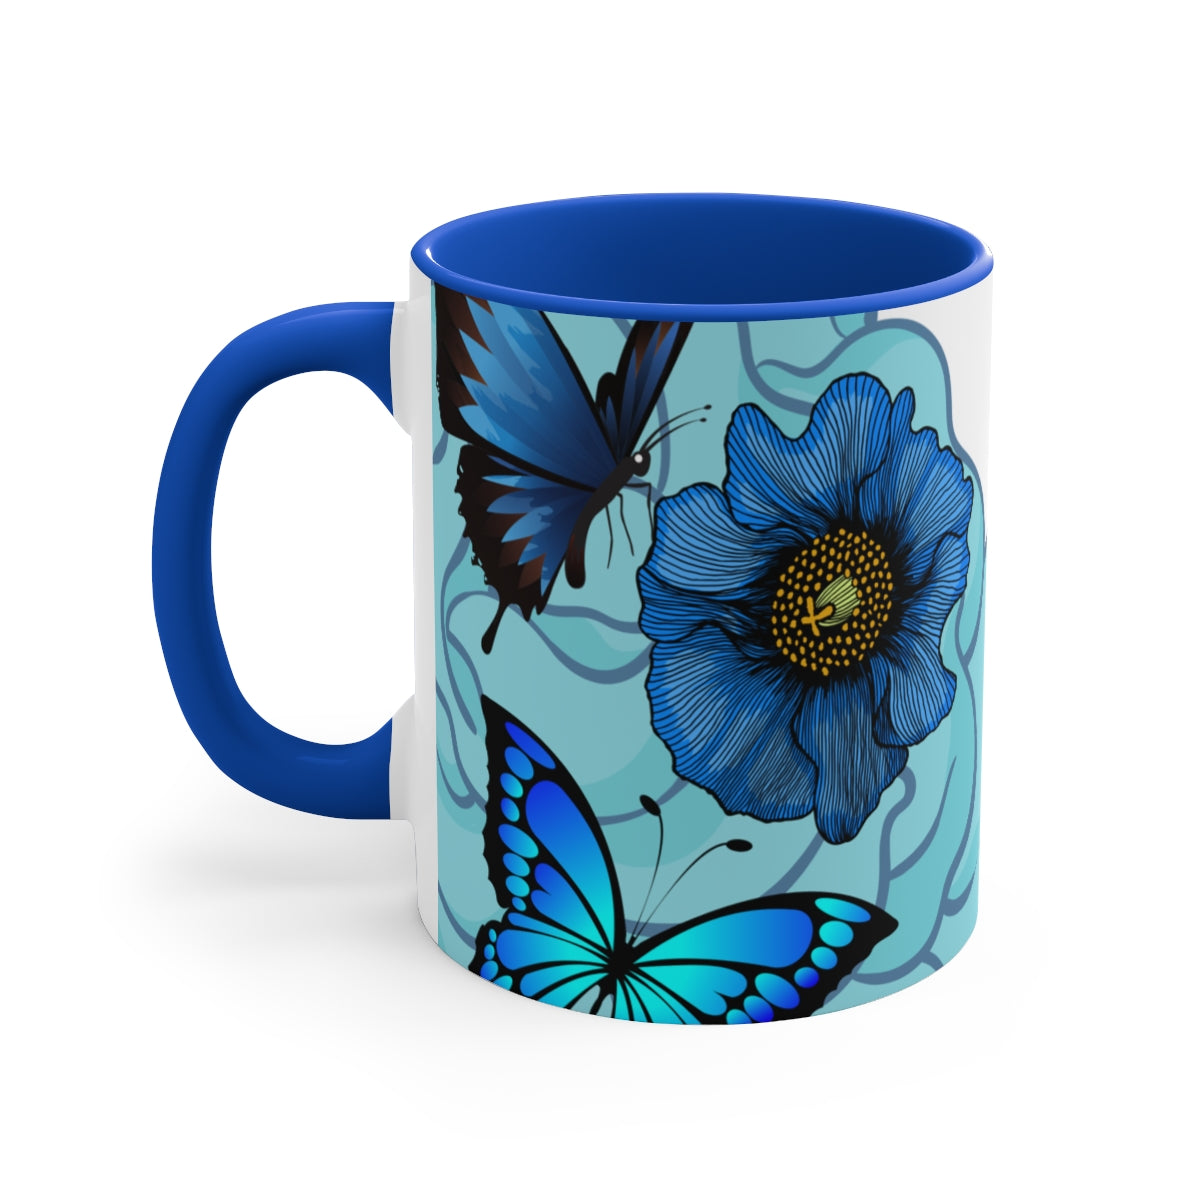 DESIGNER BUTTERFLY ACCENT COFFEE MUG, BLUE FLOWERS MUG 11 OZ